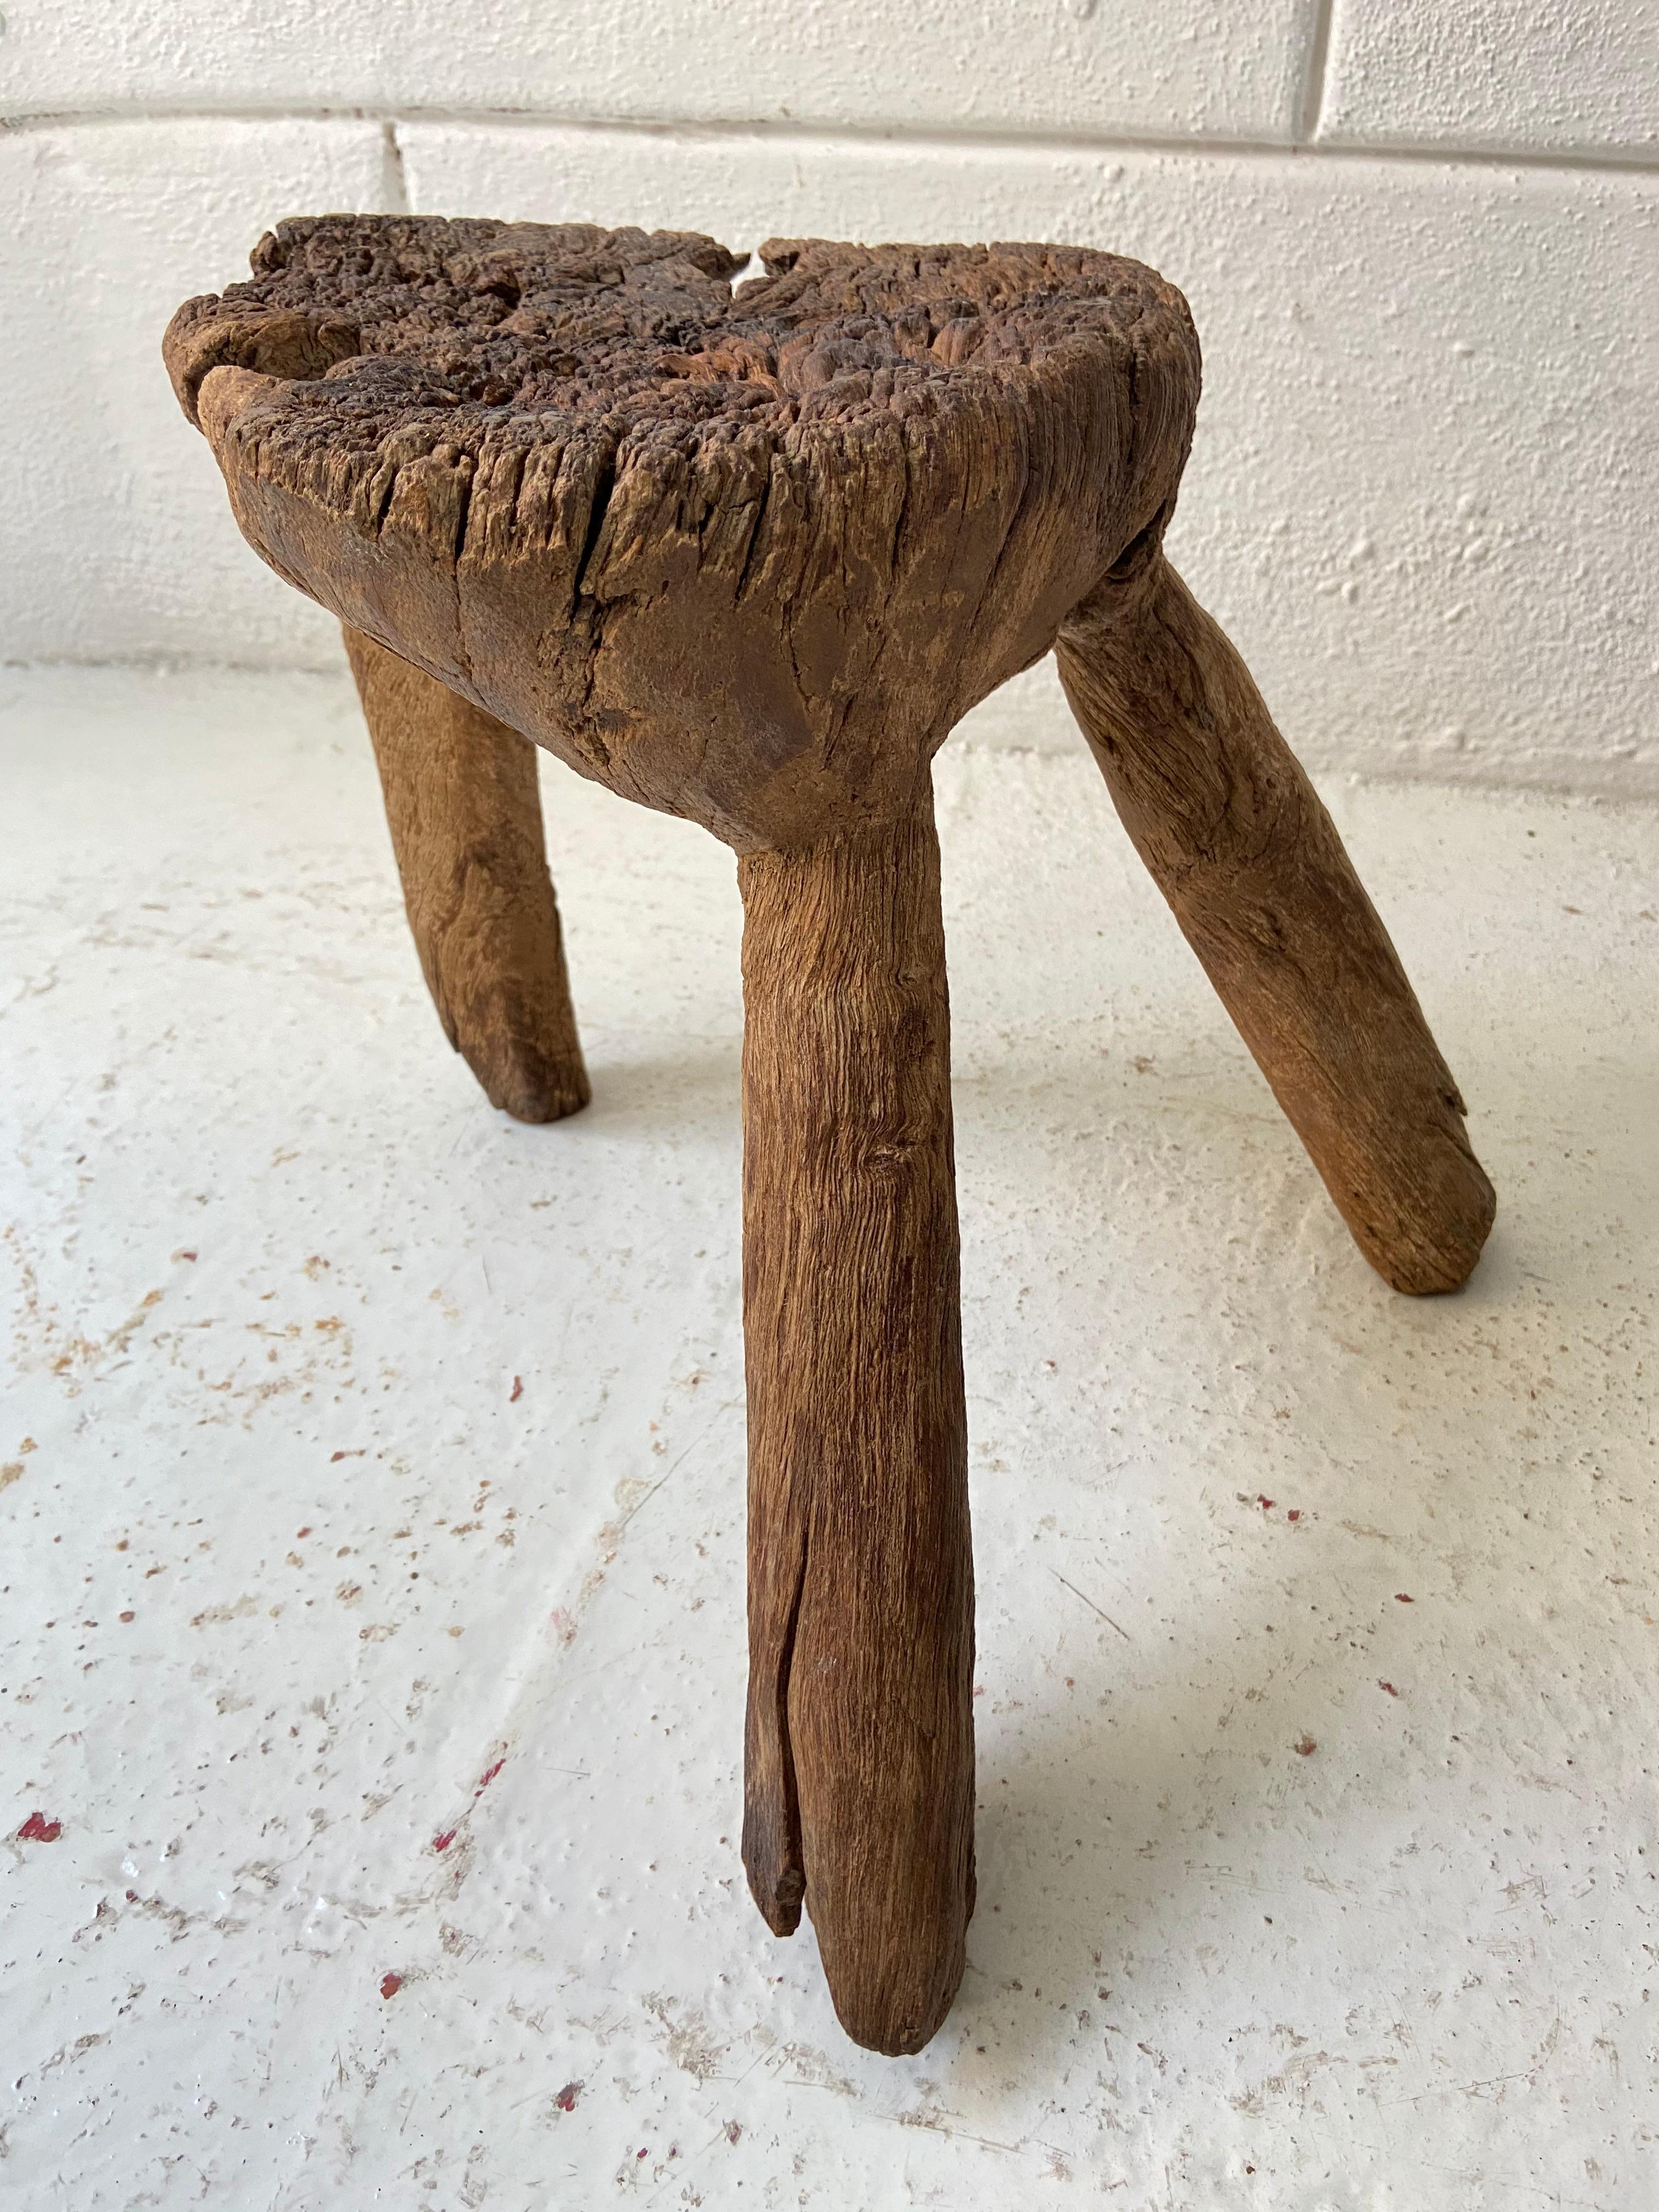 Late 19th century rustic mesquite stool from San Felipe, Guanajuato, Mexico.